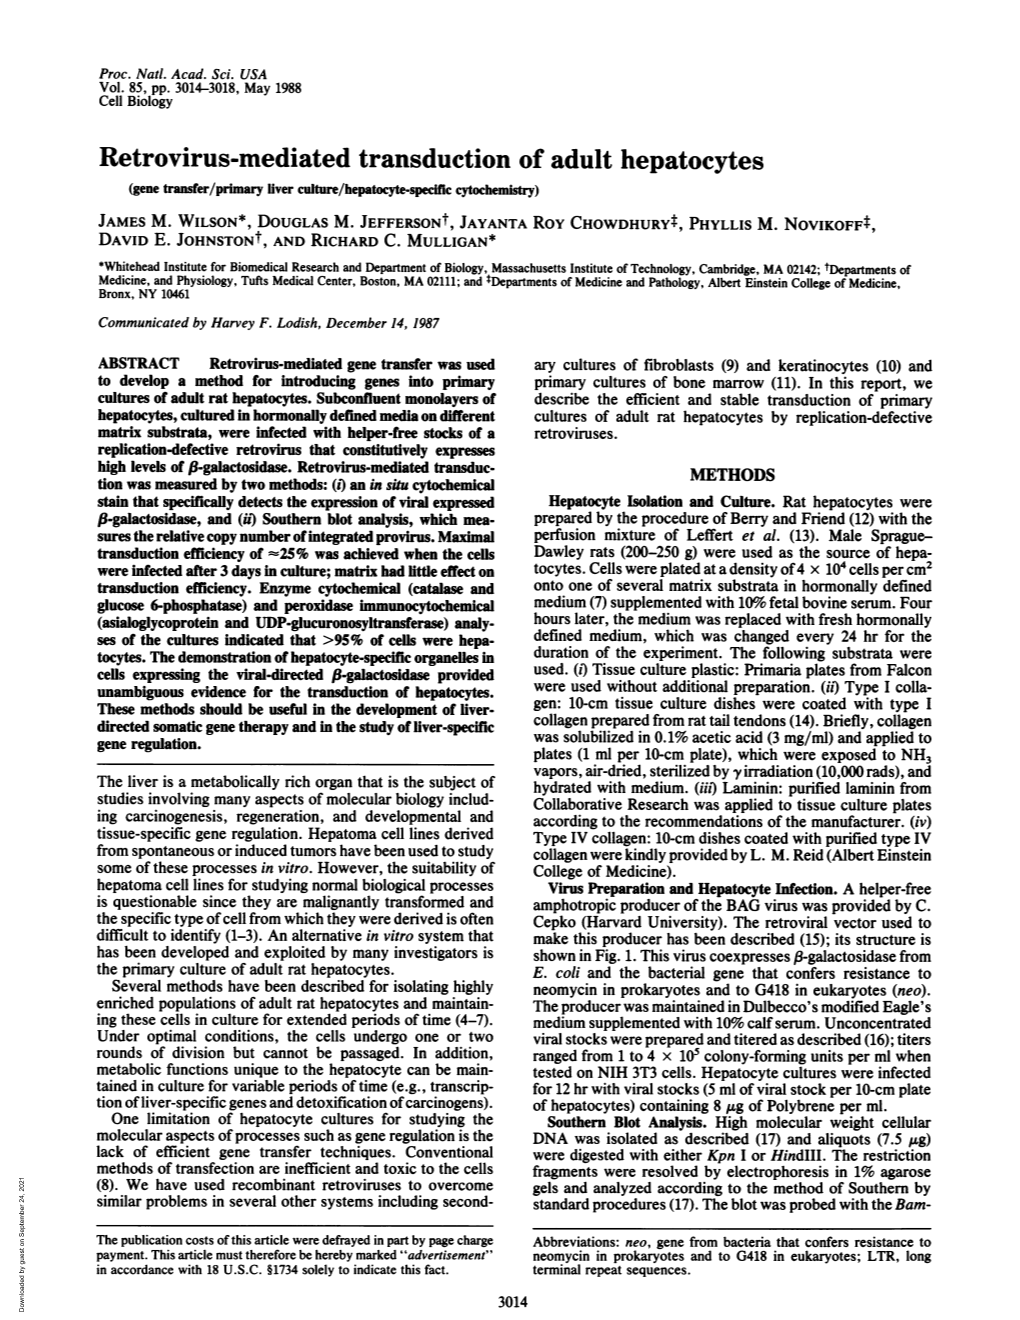 Retrovirus-Mediated Transduction of Adult Hepatocytes (Gene Transfer/Primary Liver Culture/Hepatocyte-Speciflc Cytochemistry) JAMES M